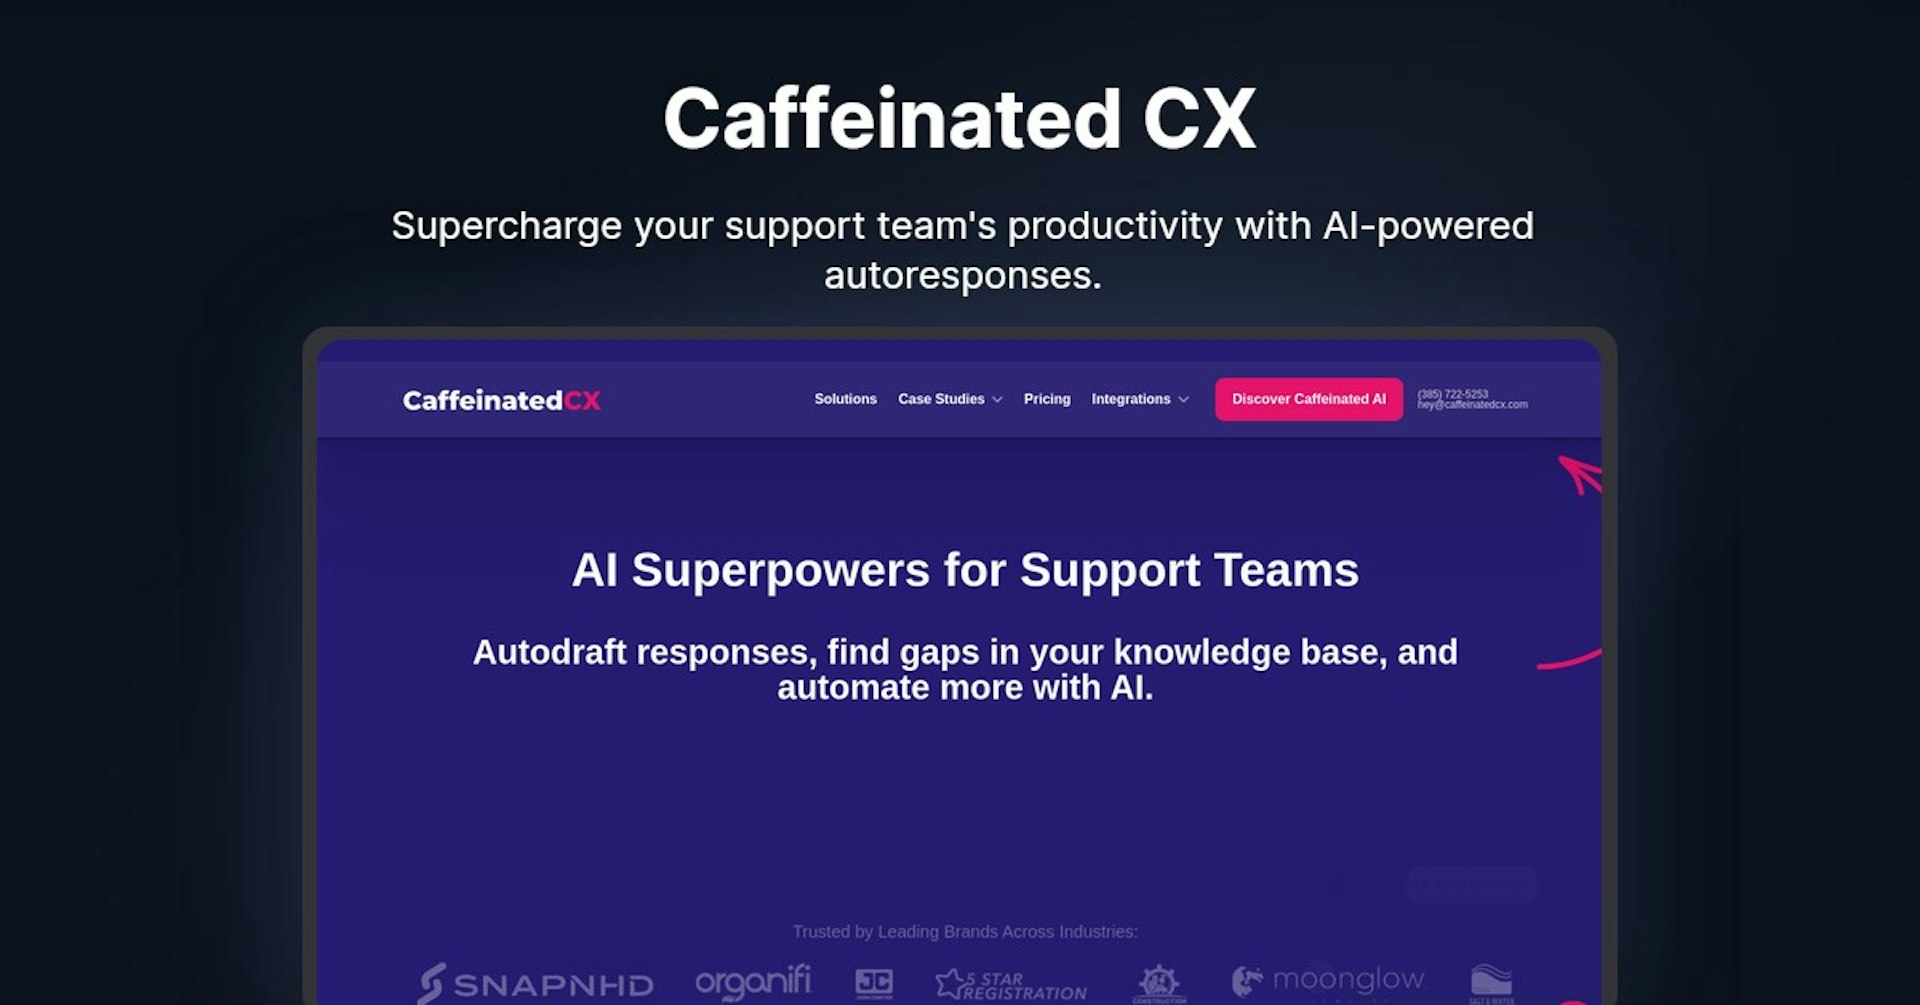 Caffeinated CX